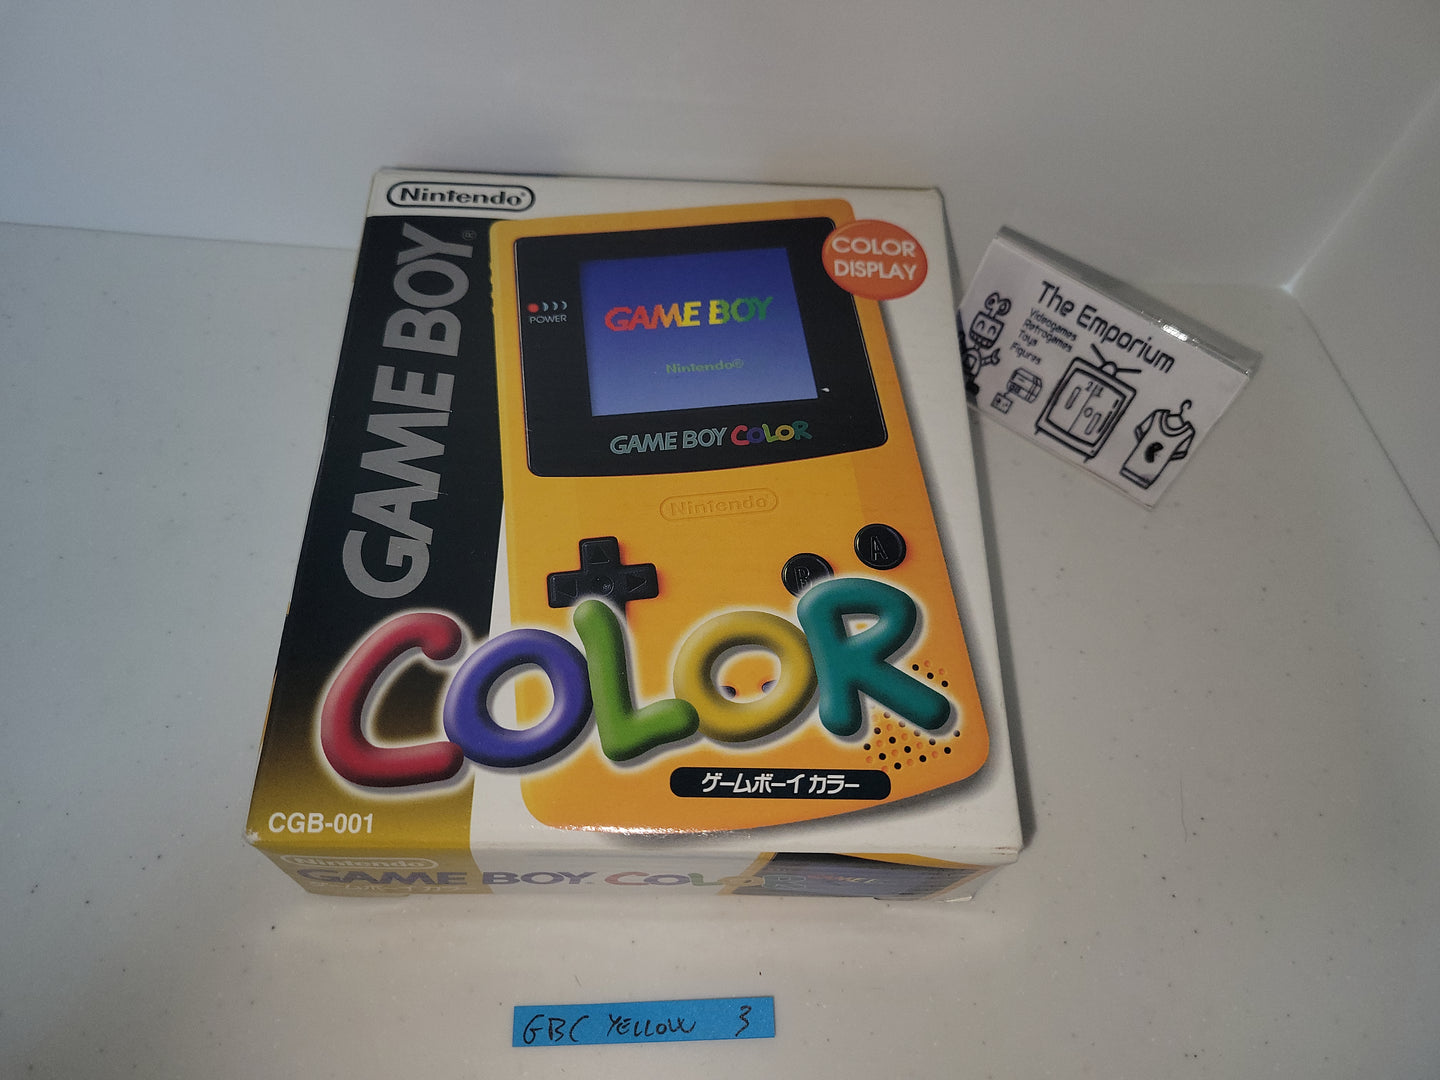 GameBoy Color Console -Yellow- - Nintendo GB GameBoy